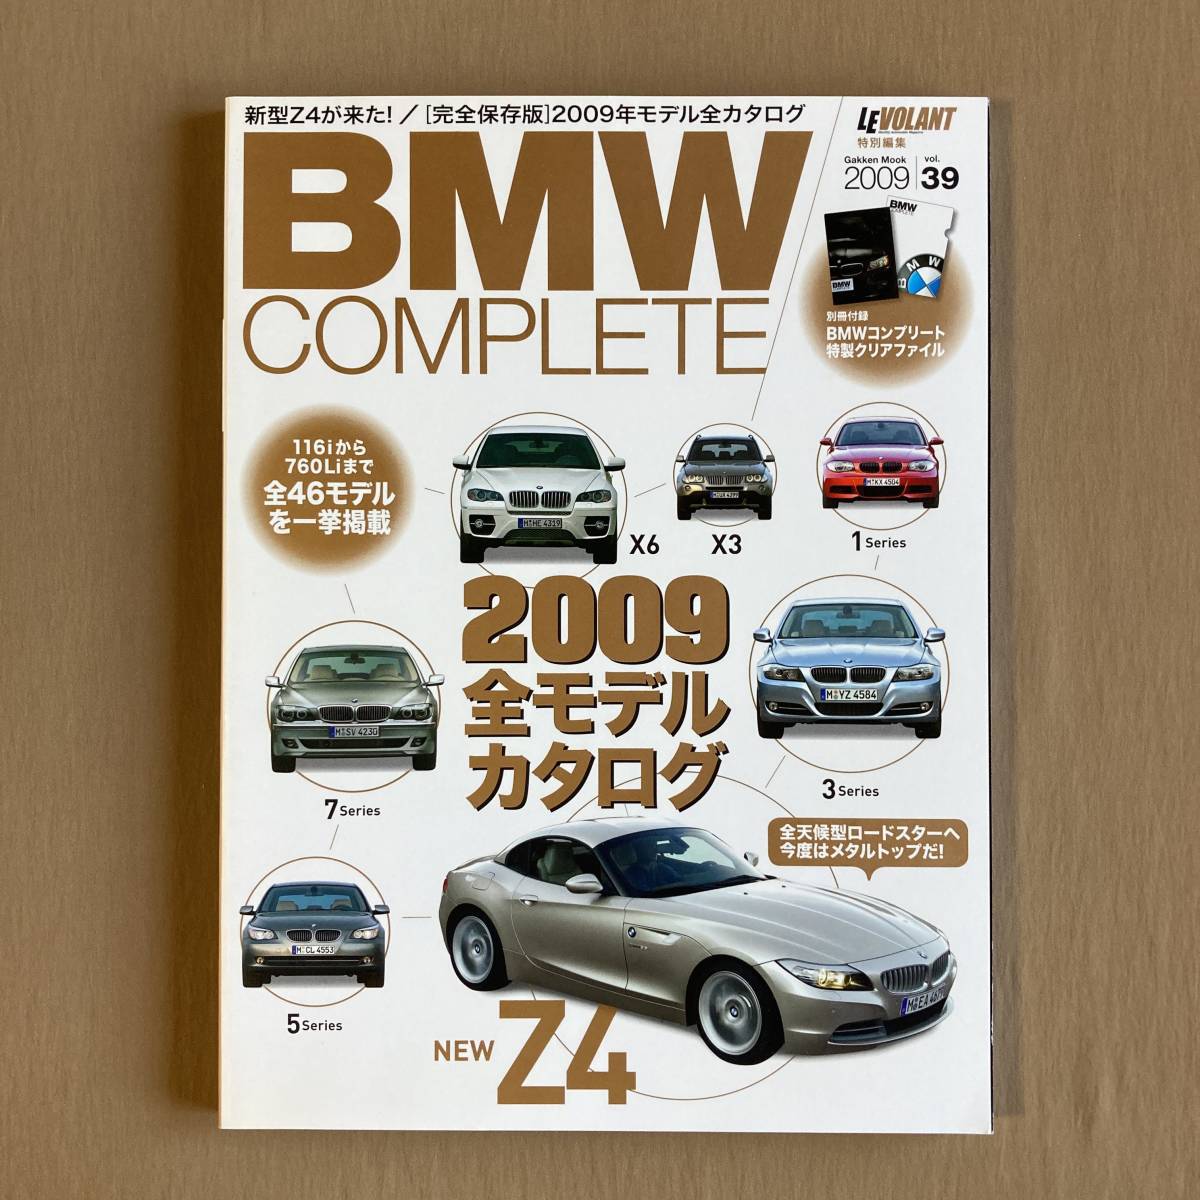 BMWコンプリート 2009年VOL.39★完全保存版 2009年モデル全カタログ 116iから760Liまで 全46モデル掲載★3代目 Z4試乗の画像1